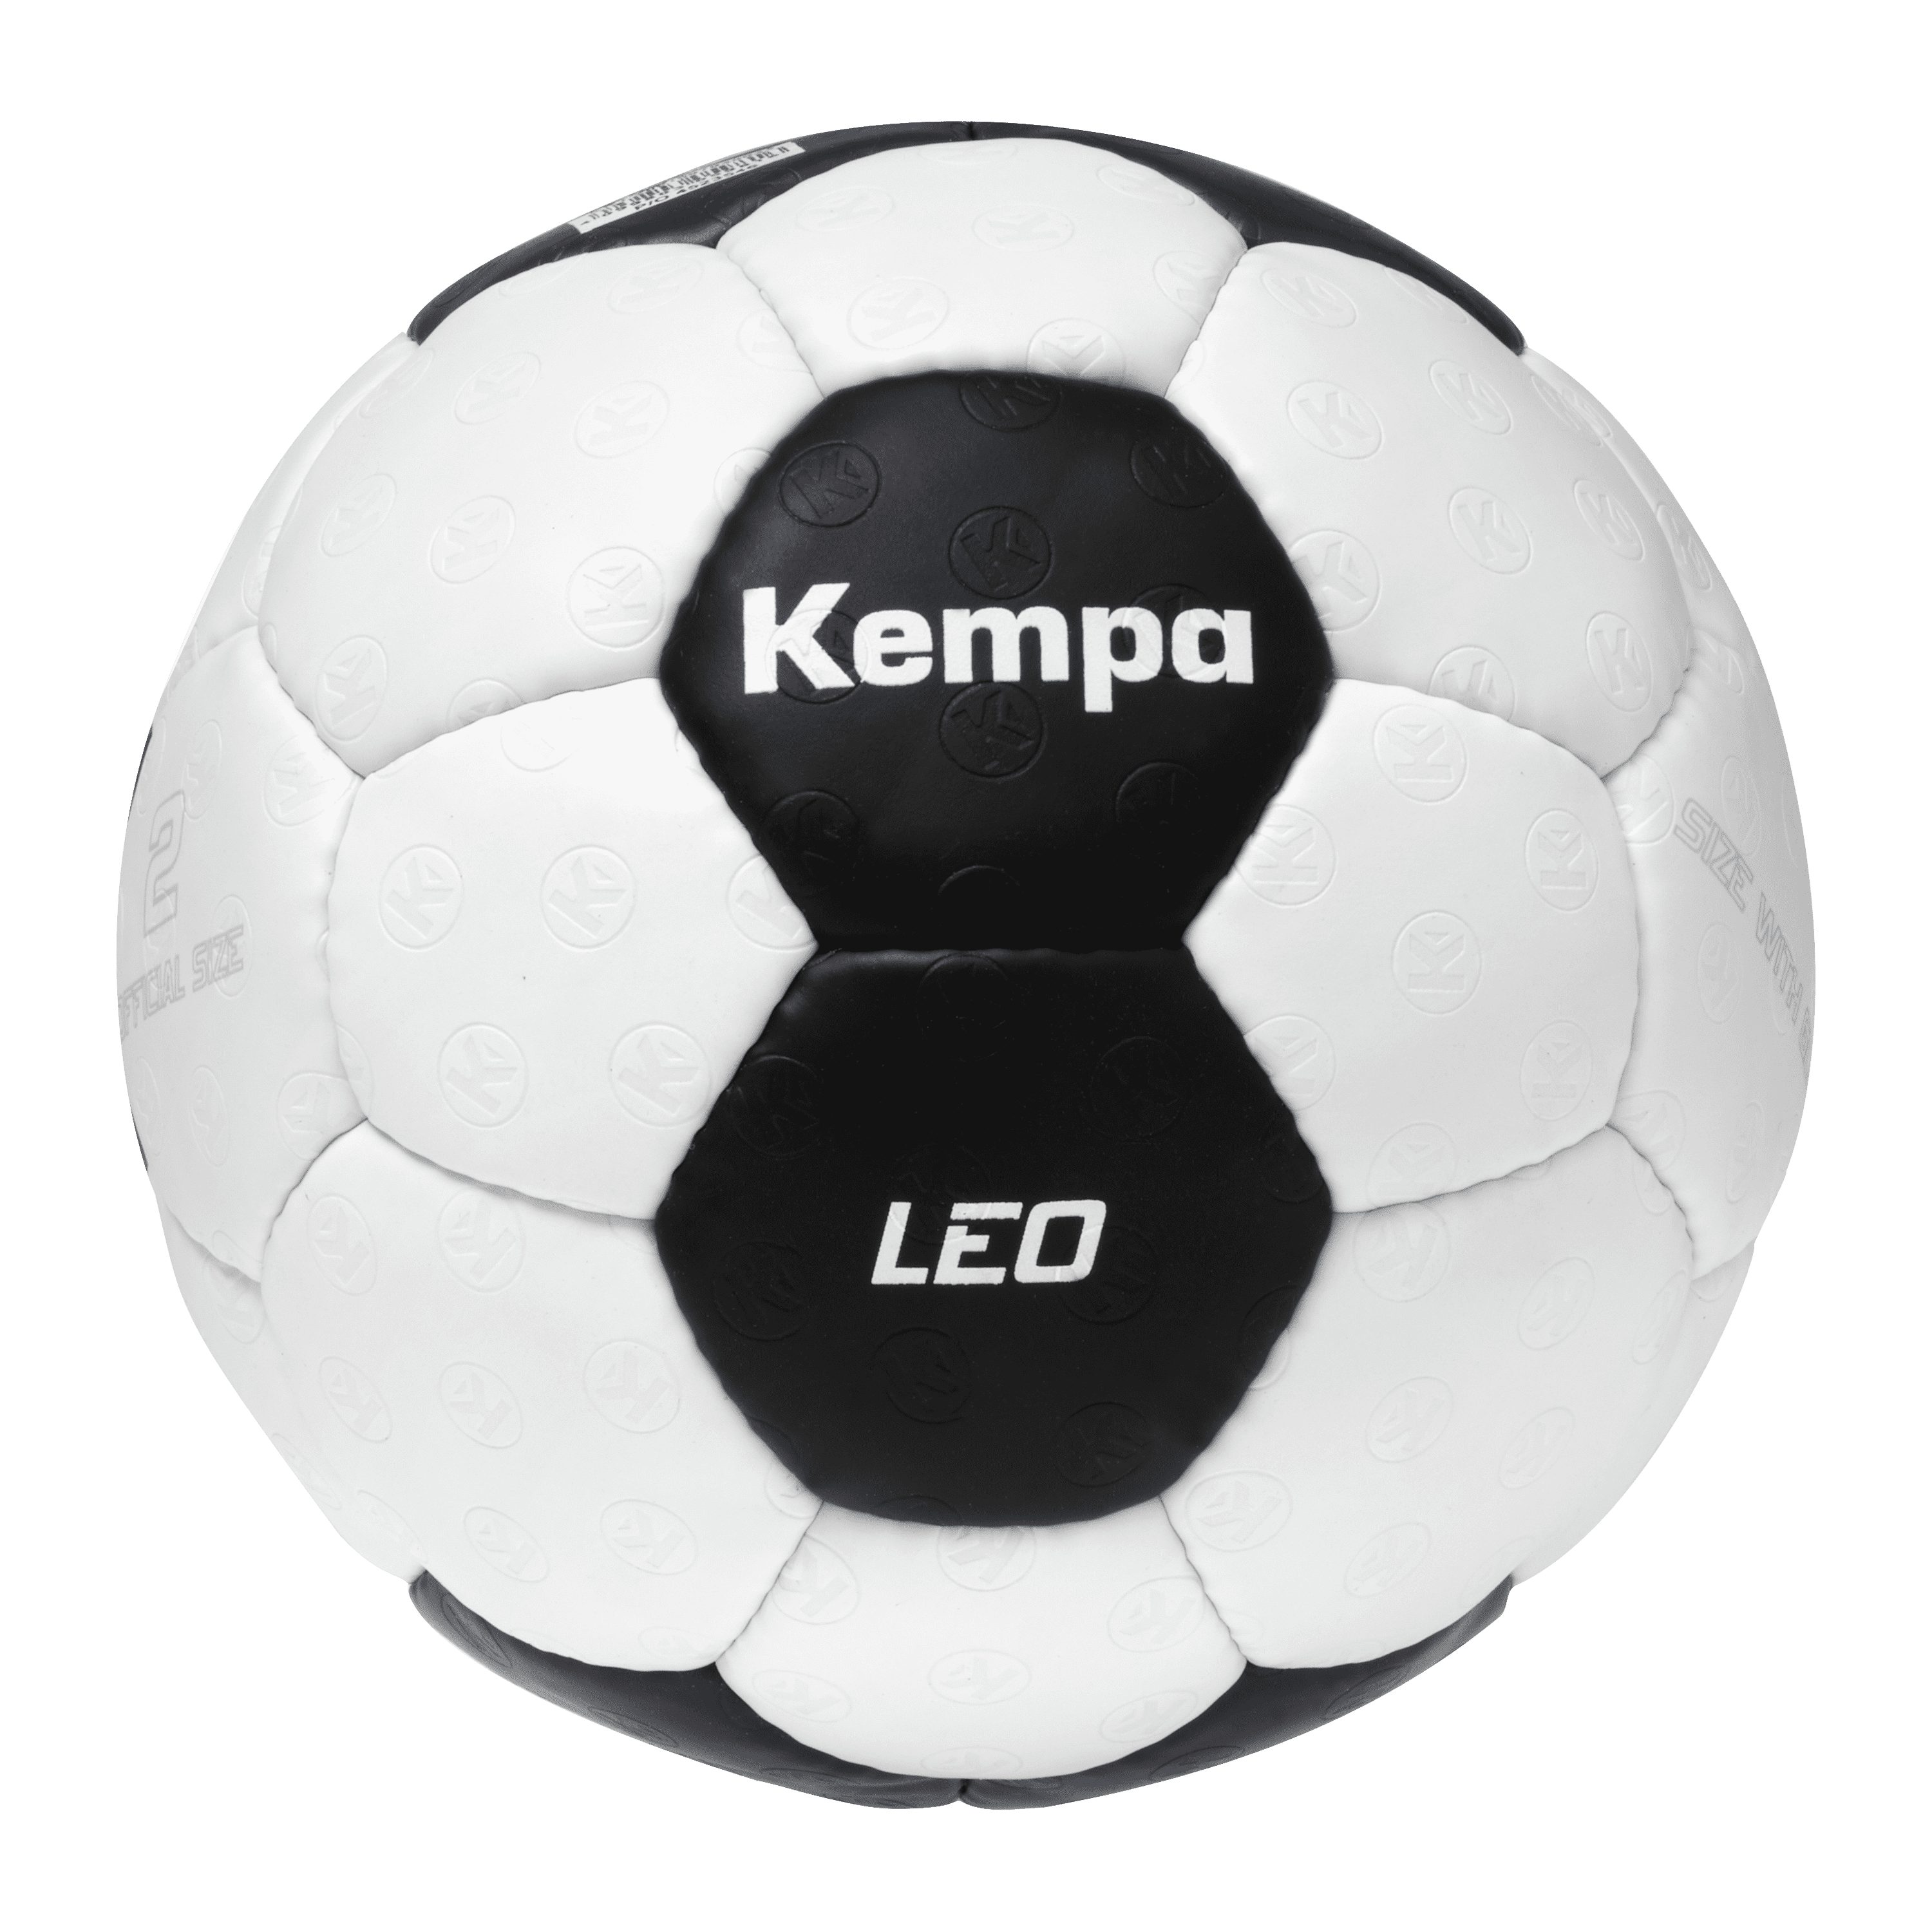 Kempa Handball Leo Game Changer